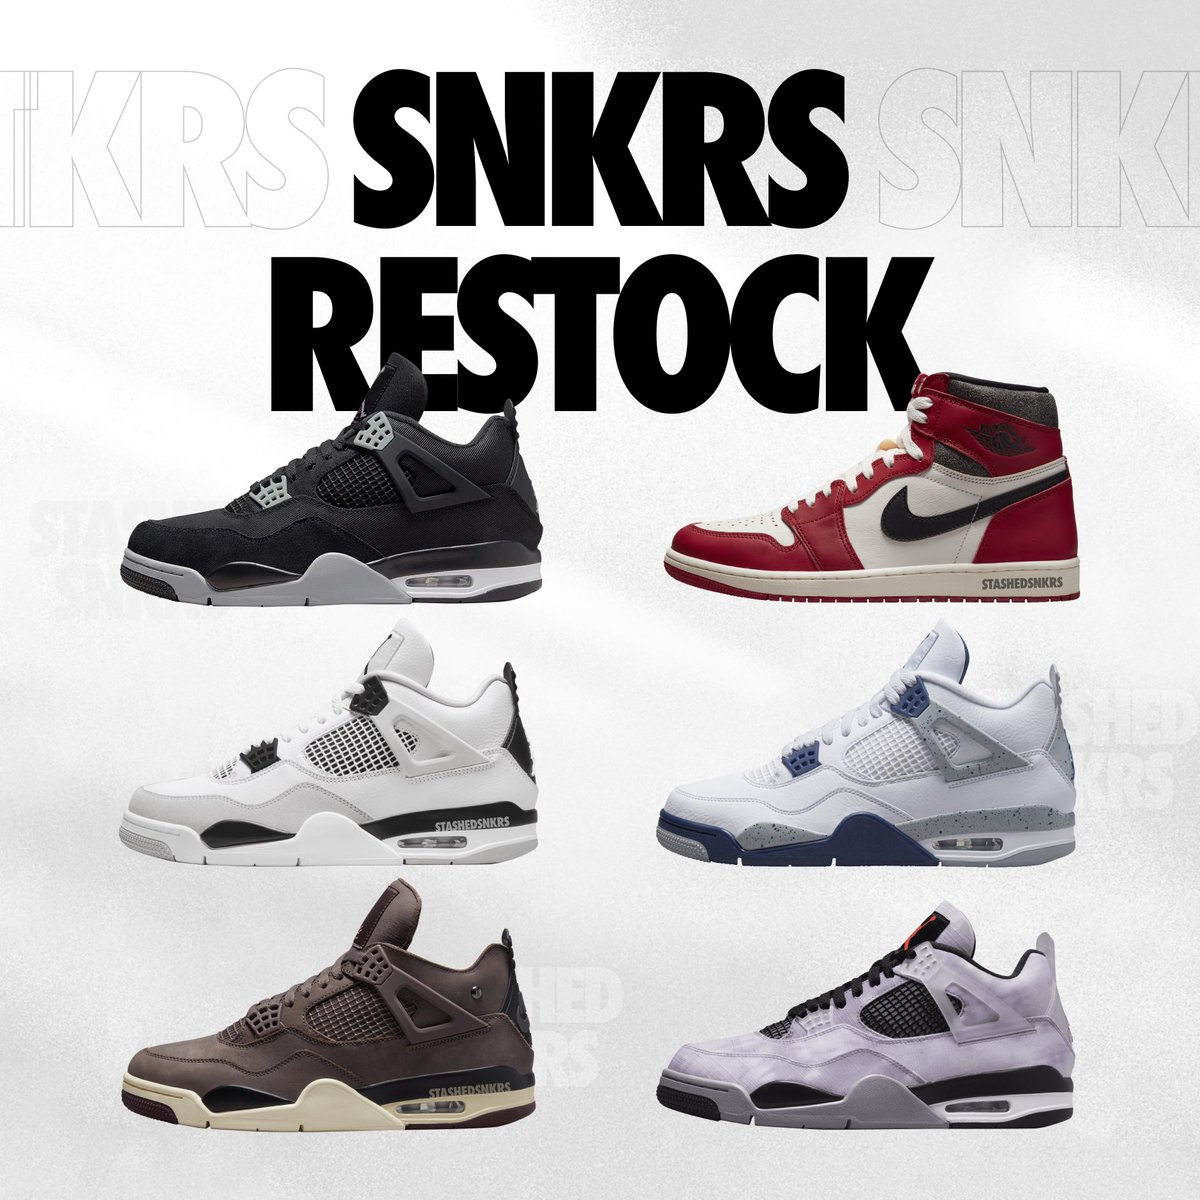 Air Jordan 1 Lost and Found Nike SNKRS Restock | SBD